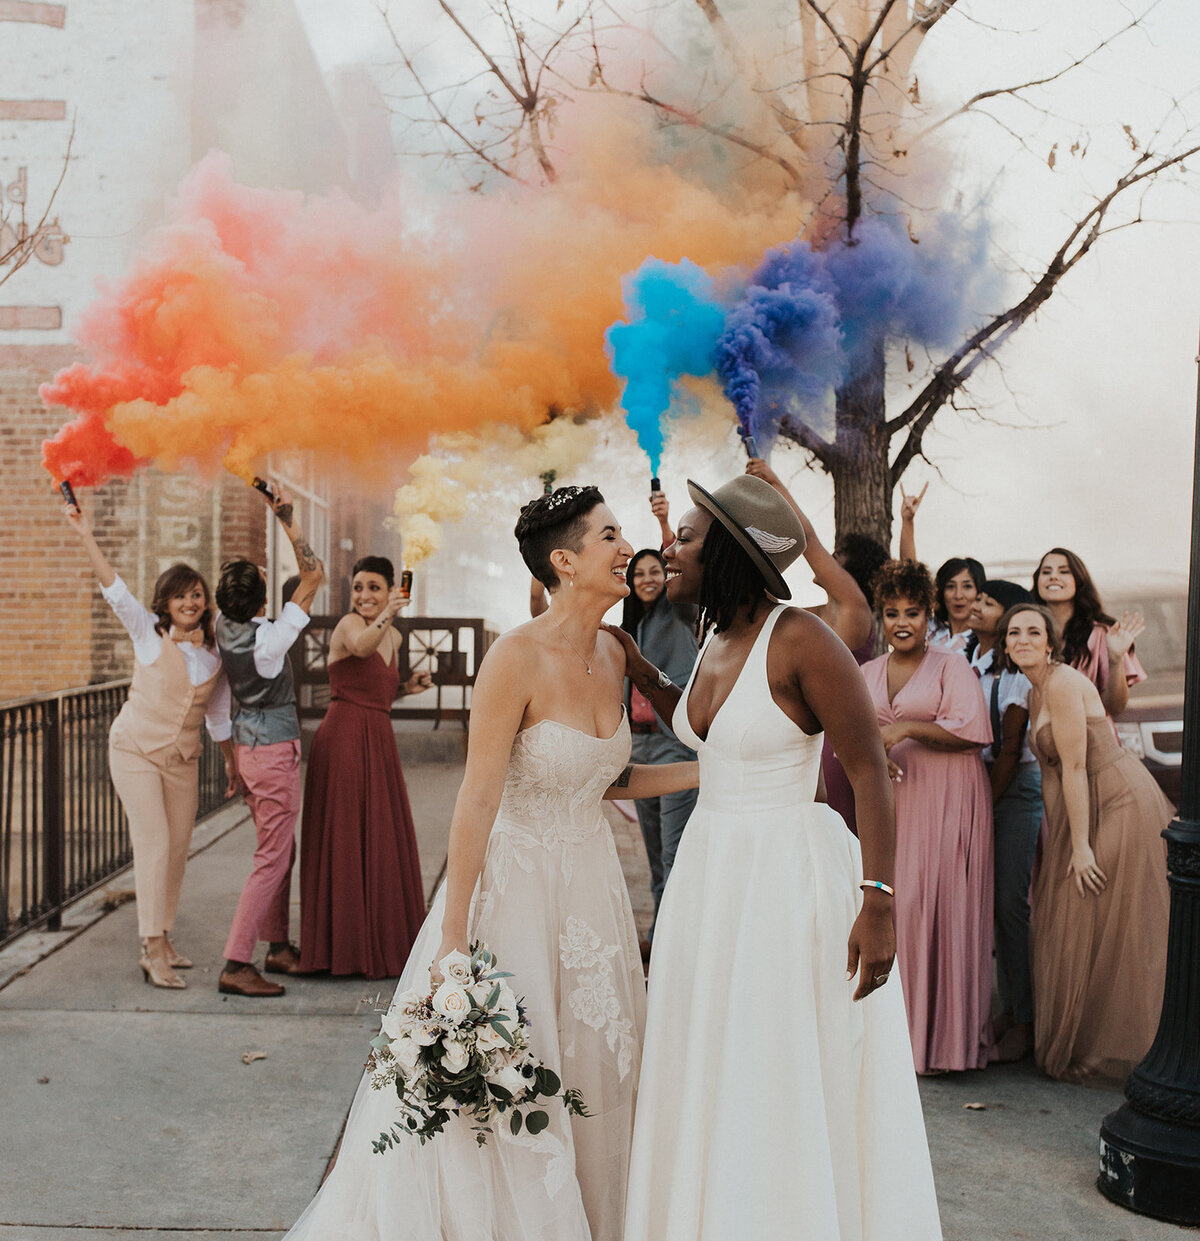 Colorado_LGBTQ_wedding_rainbow_smoke_bomb